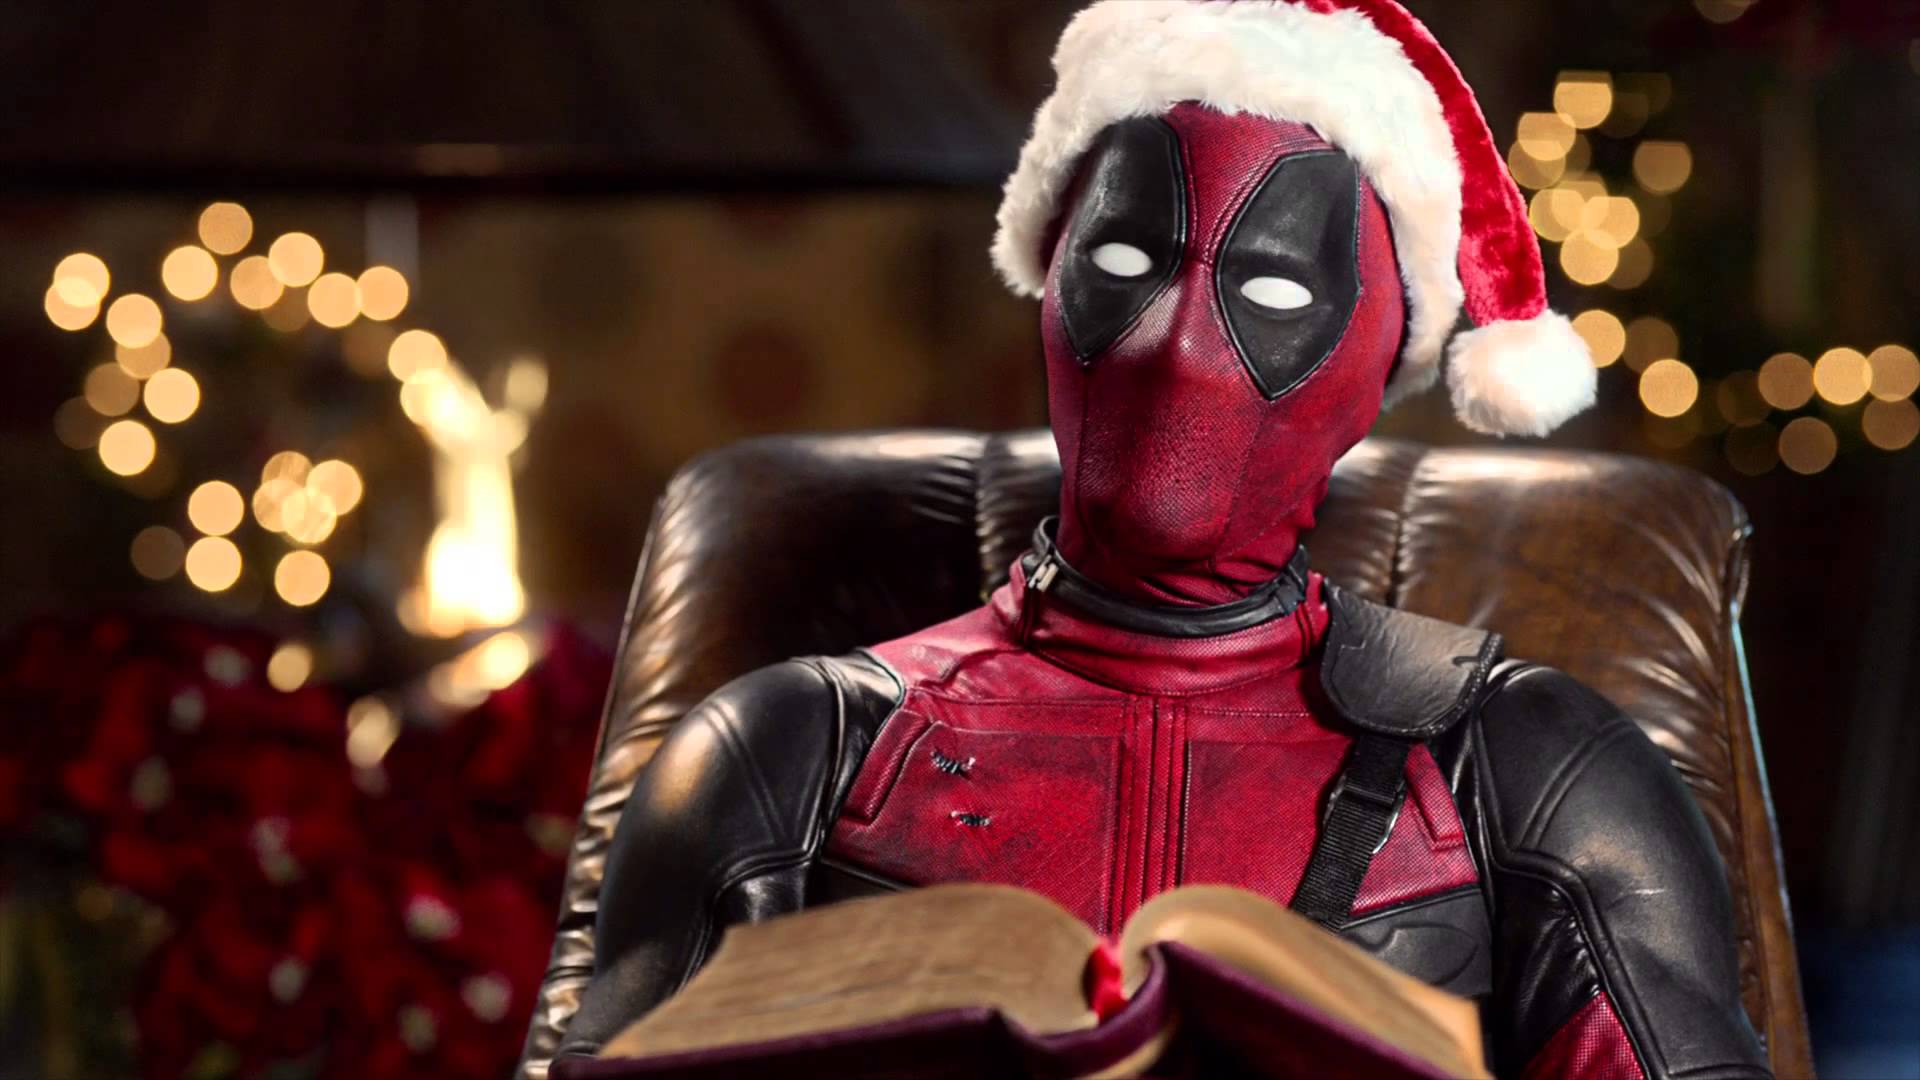 Fox anuncia novo filme do Deadpool para dezembro de 2018